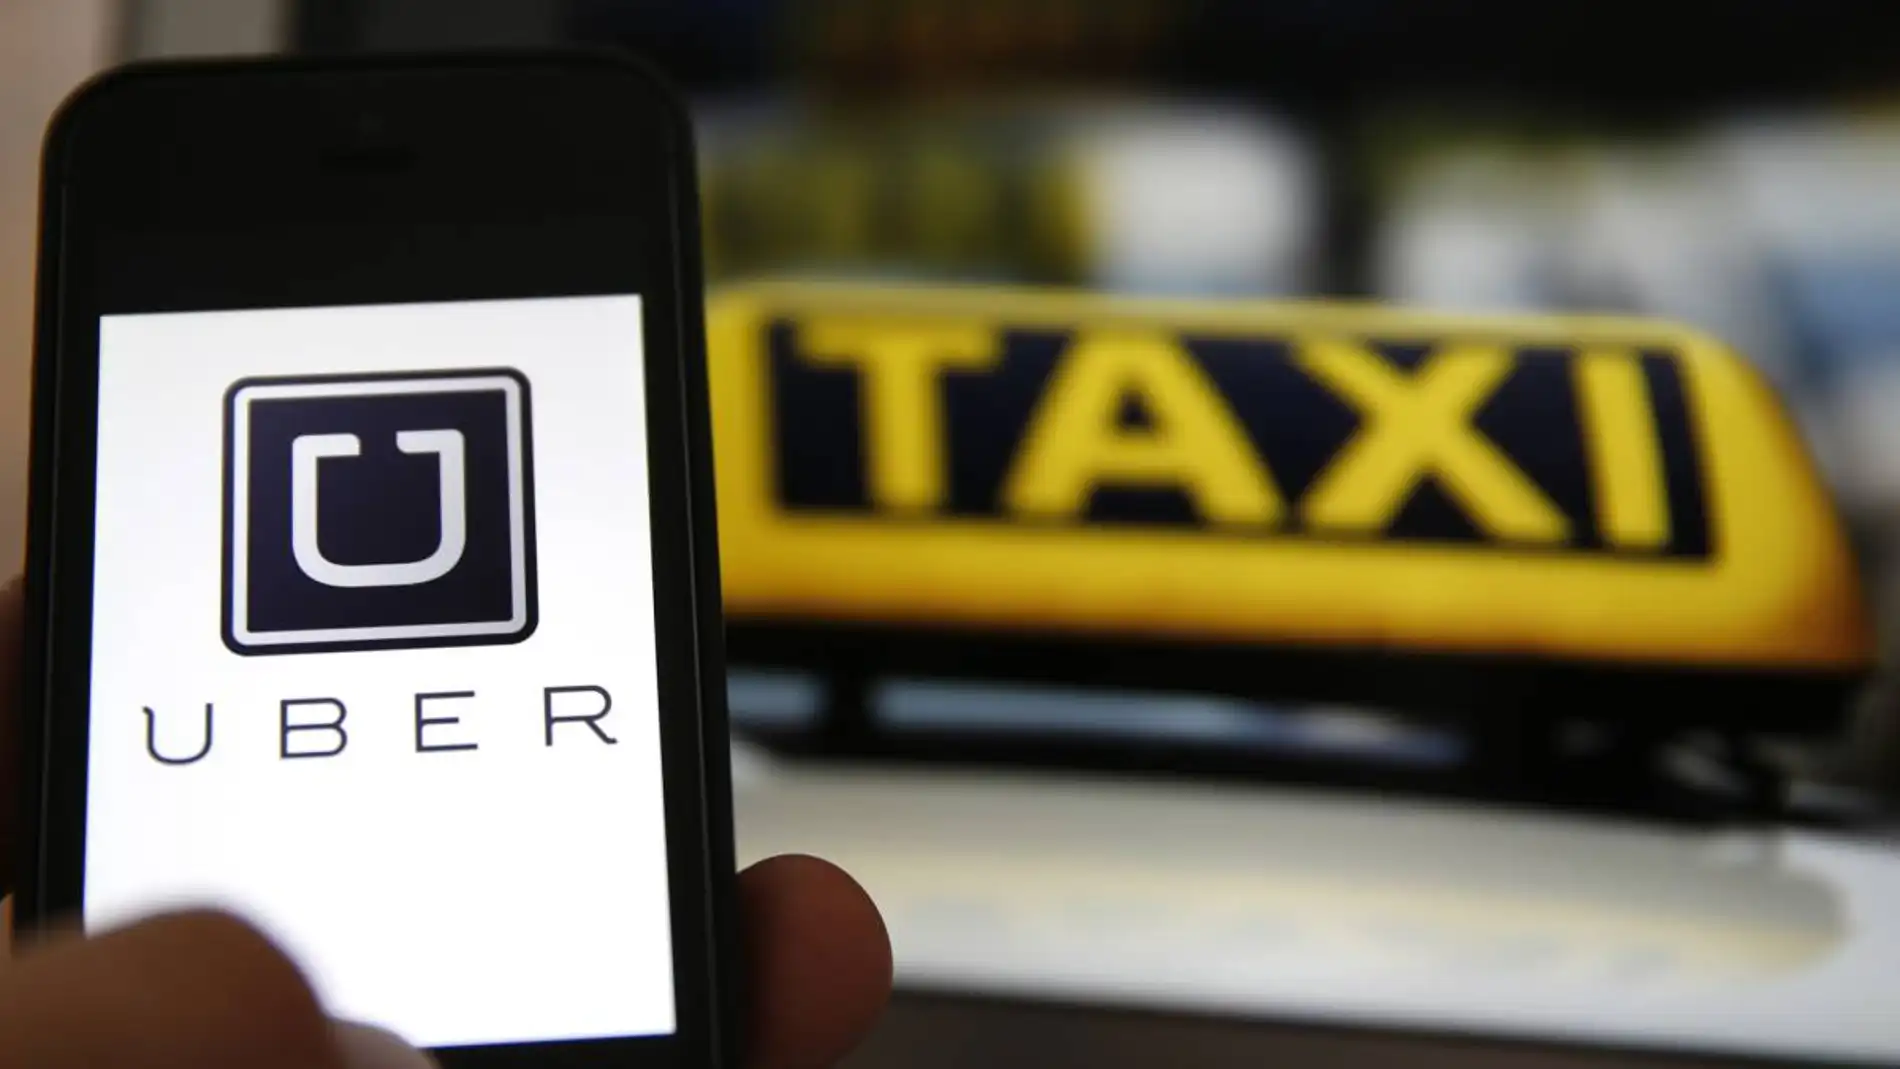 taxi-uber-cabify-1117-01.jpg